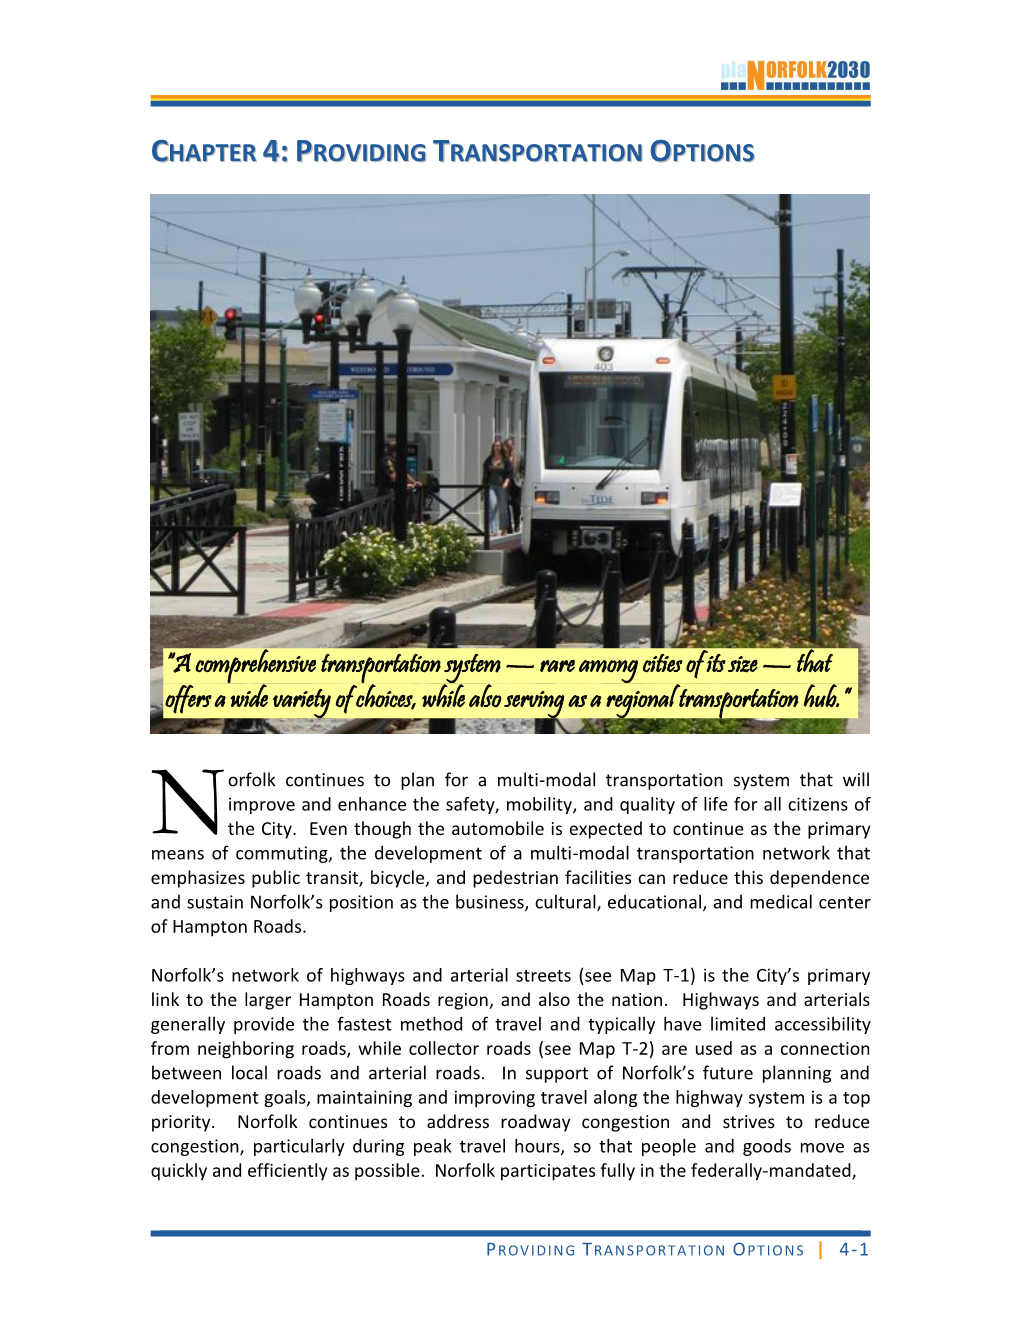 Chapter 4: Providing Transportation Options